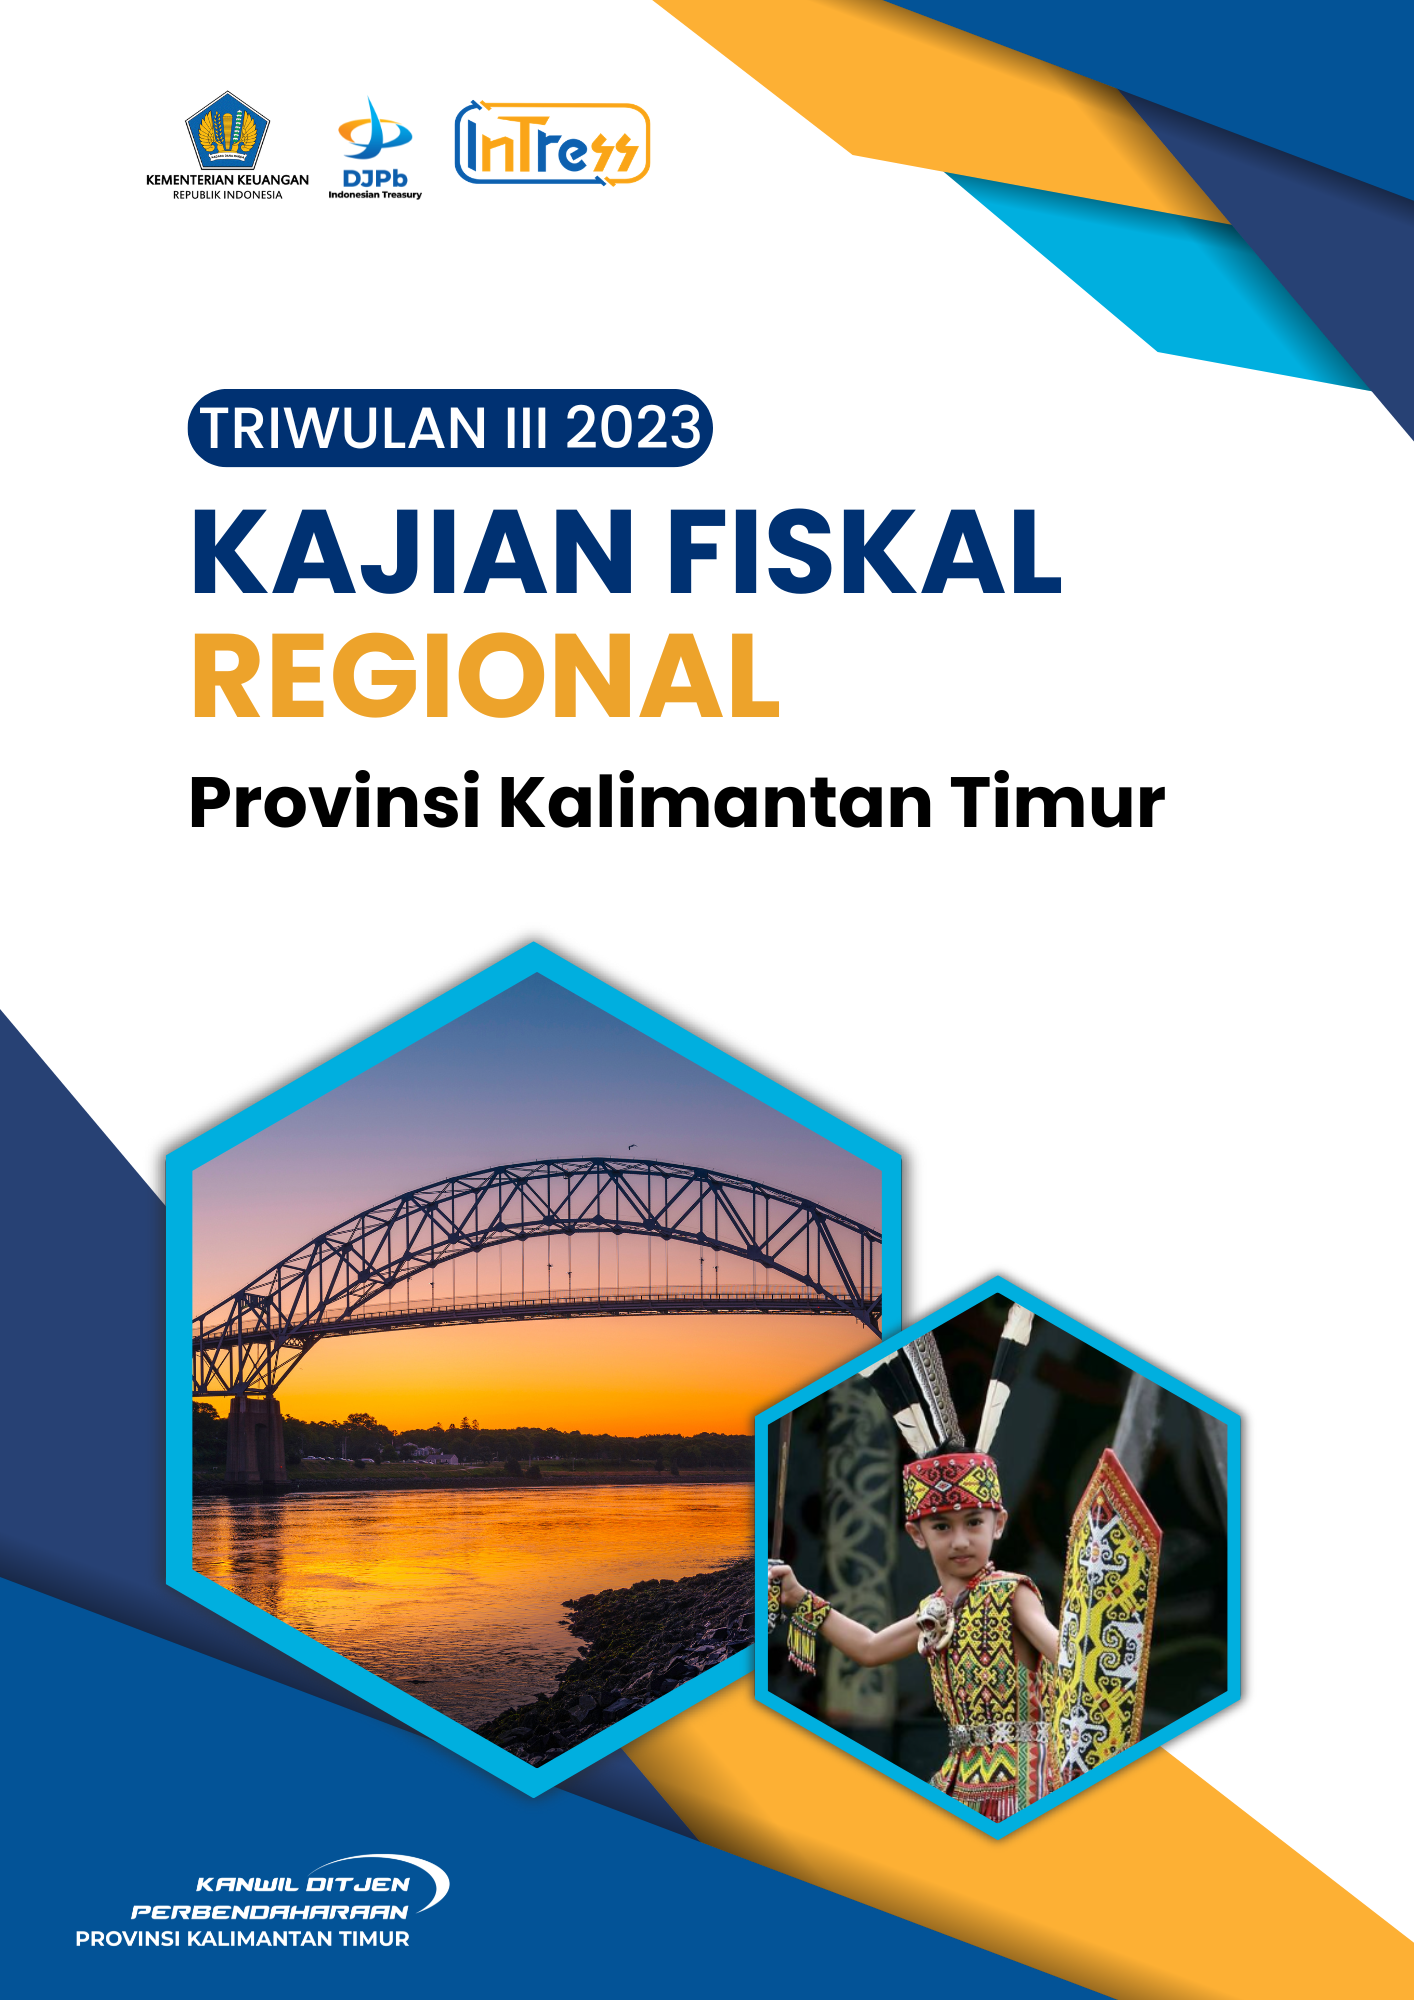 KFR Kanwil DJPb Kaltim Triwulan III TA 2023.png - 1.28 MB